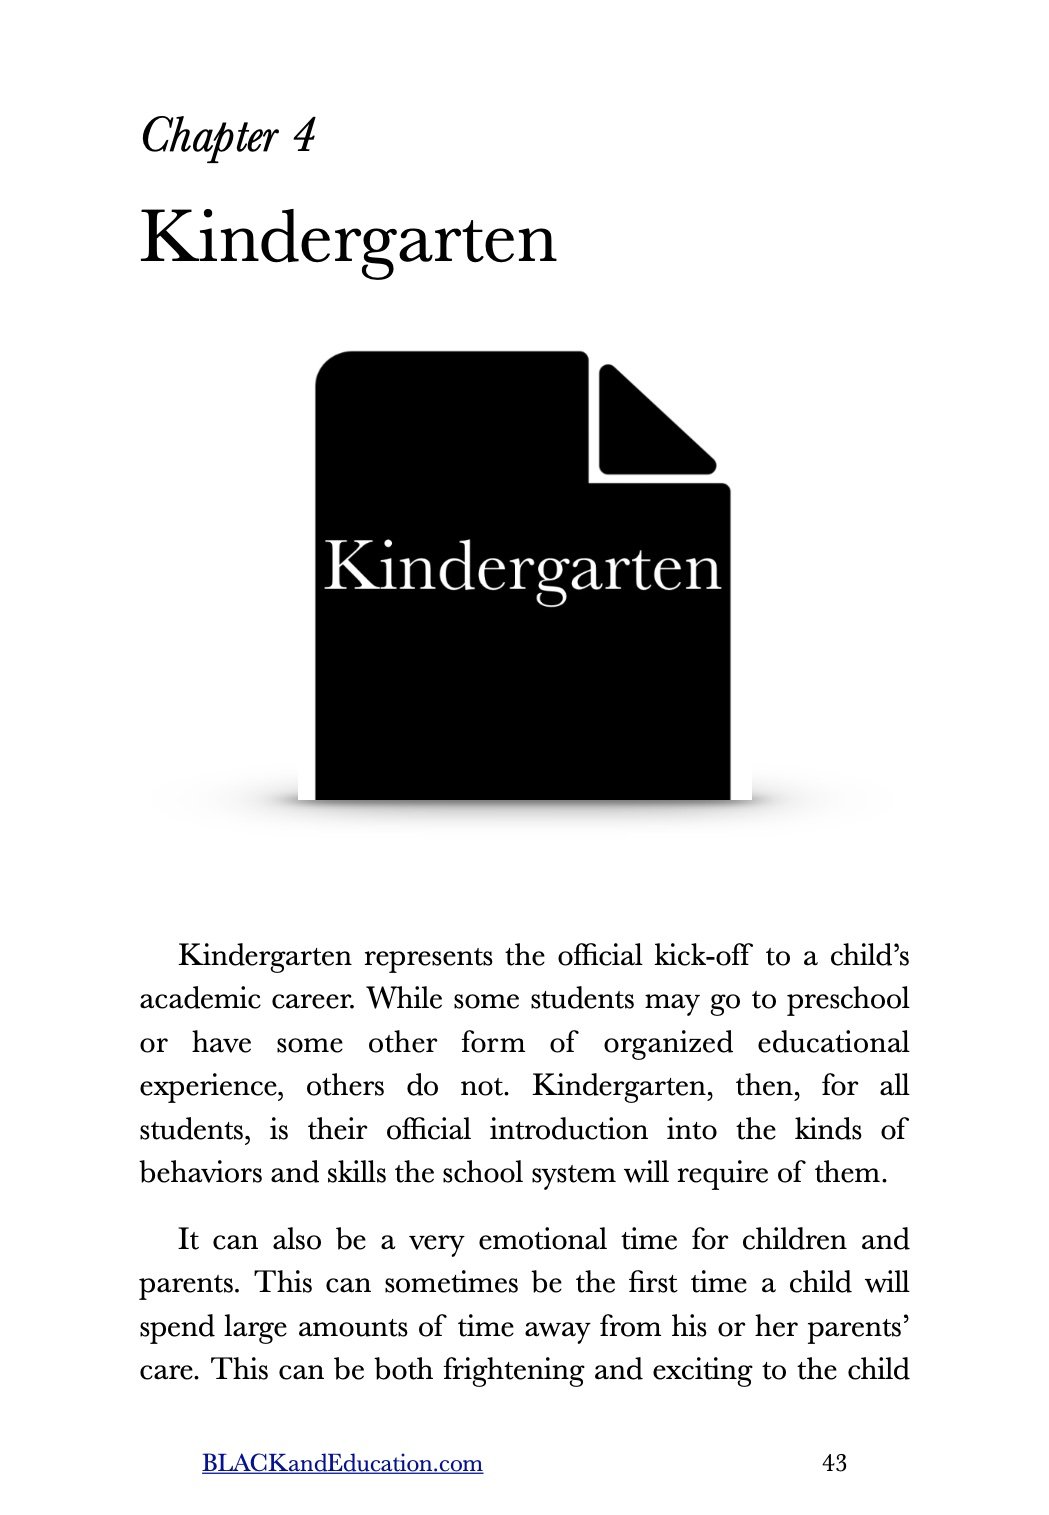 Kindergarten Introduction.jpg